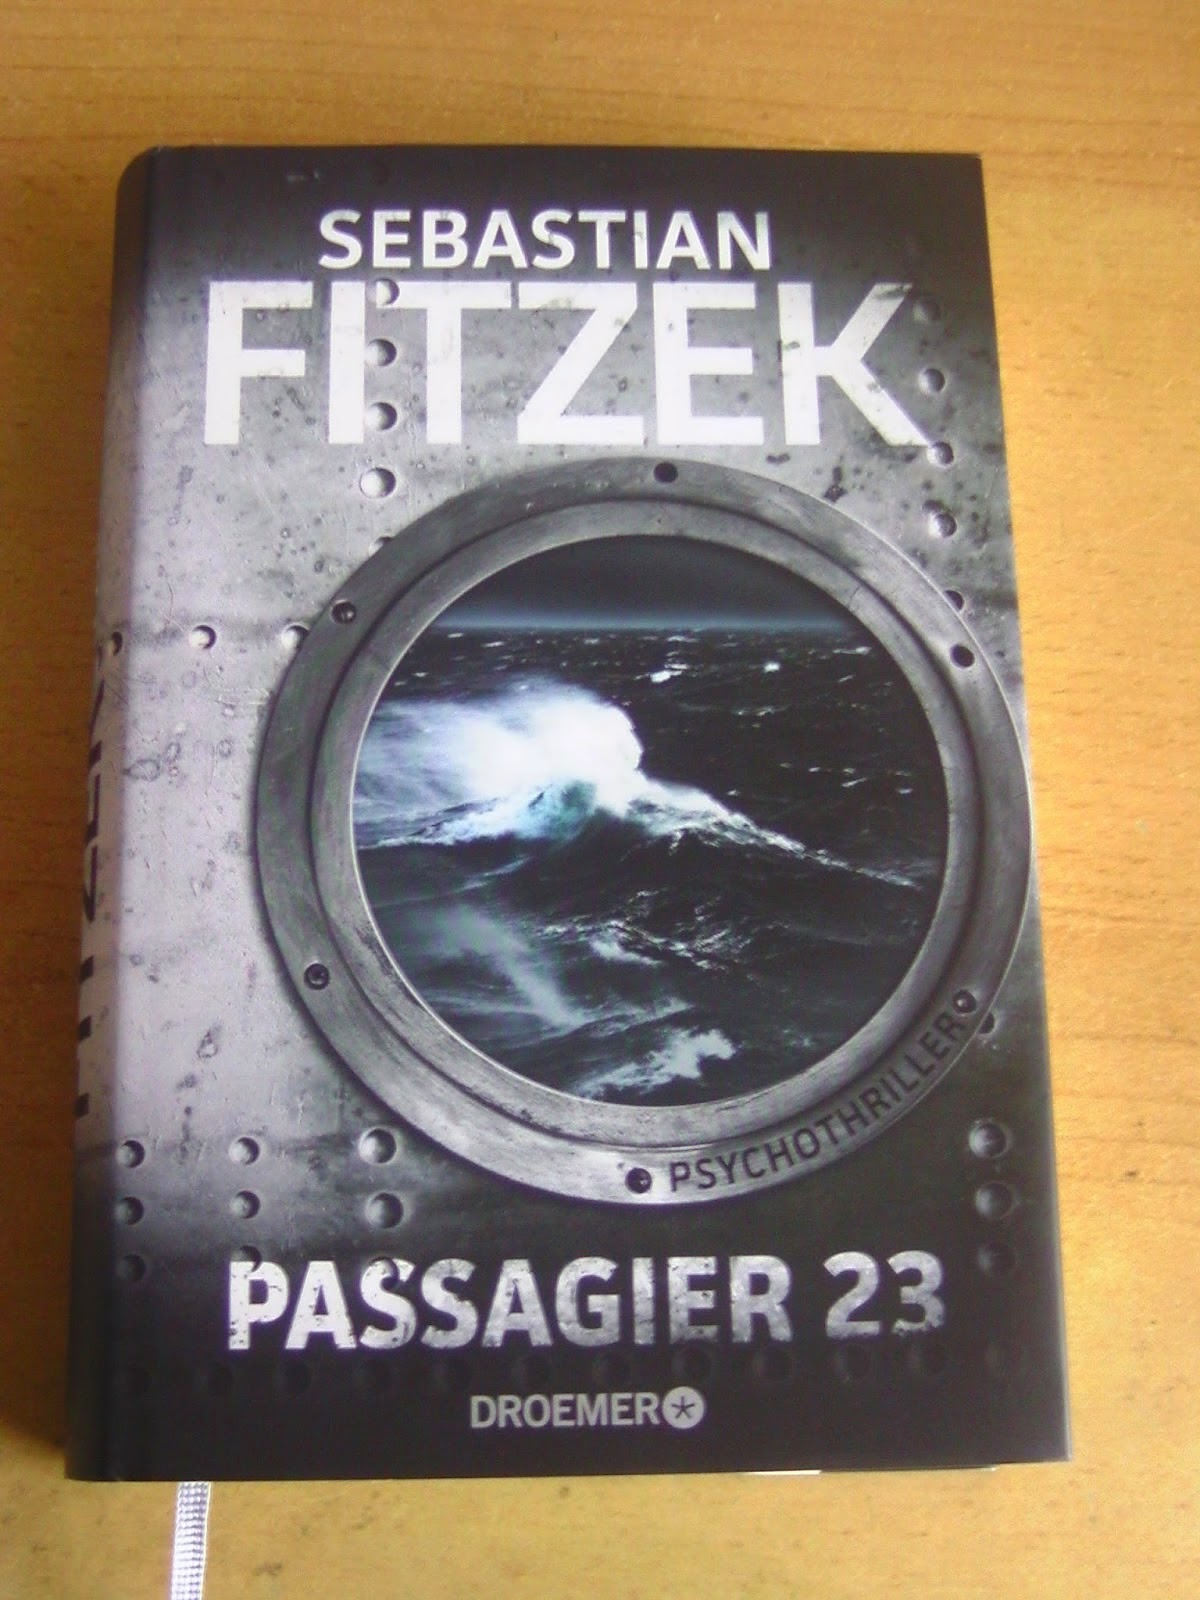 http://www.amazon.de/Passagier-23-Psychothriller-Sebastian-Fitzek/dp/342619919X/ref=sr_1_1?s=books&ie=UTF8&qid=1429121097&sr=1-1&keywords=passagier+23